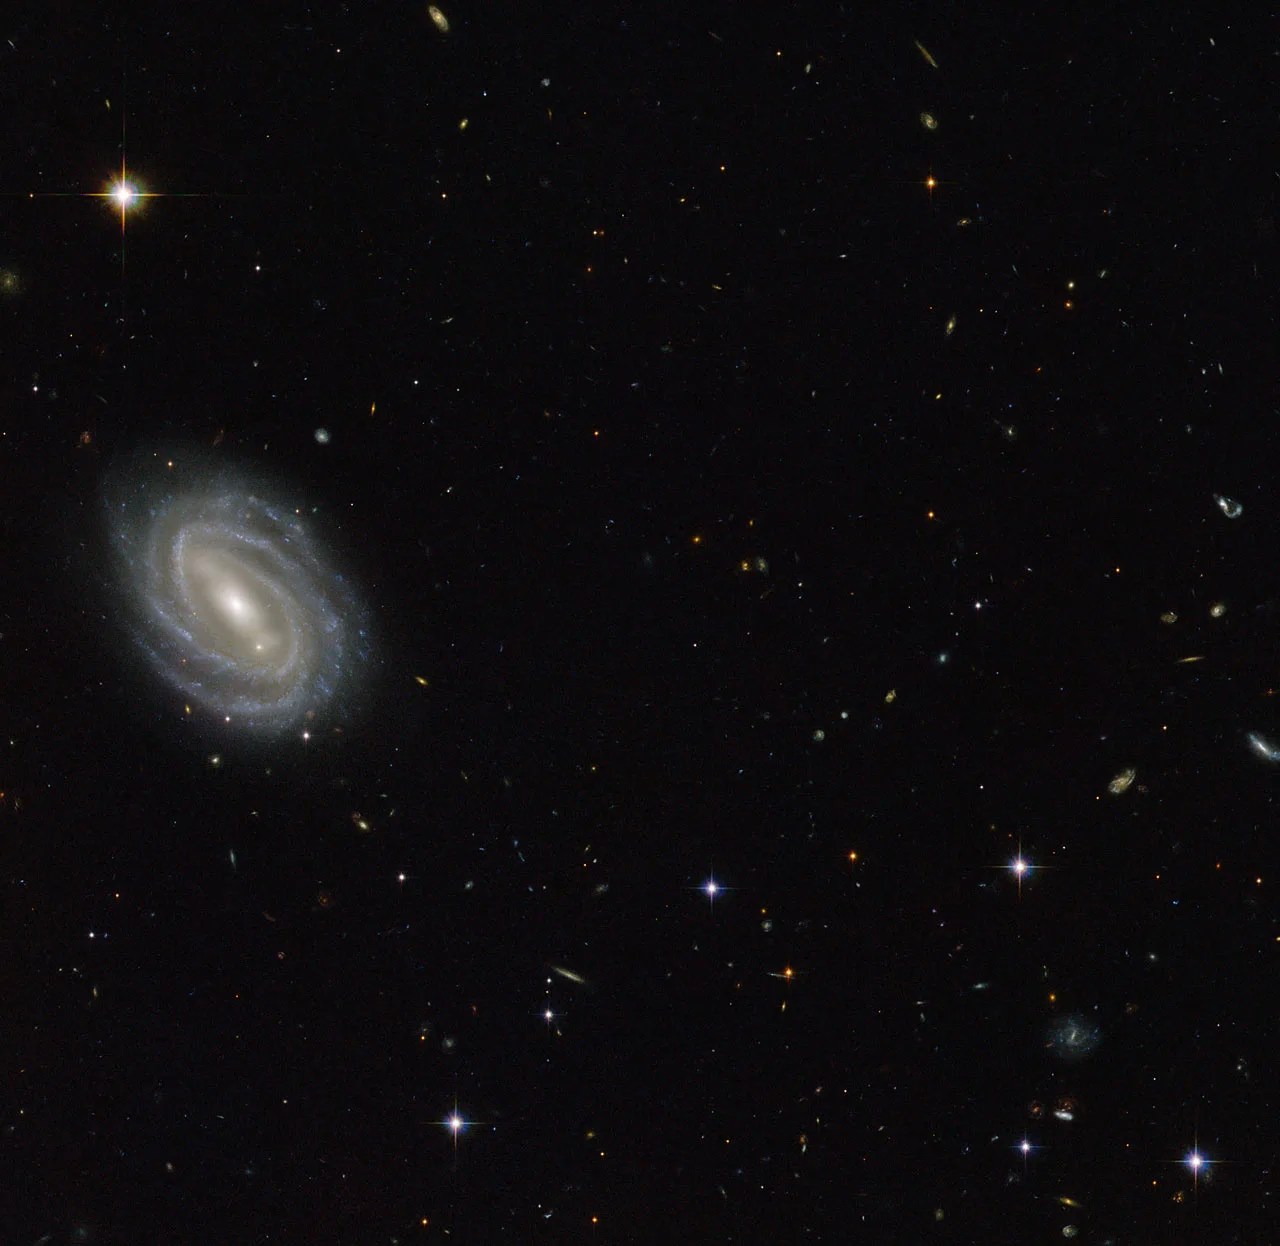 Spiral galaxy on left side of star field